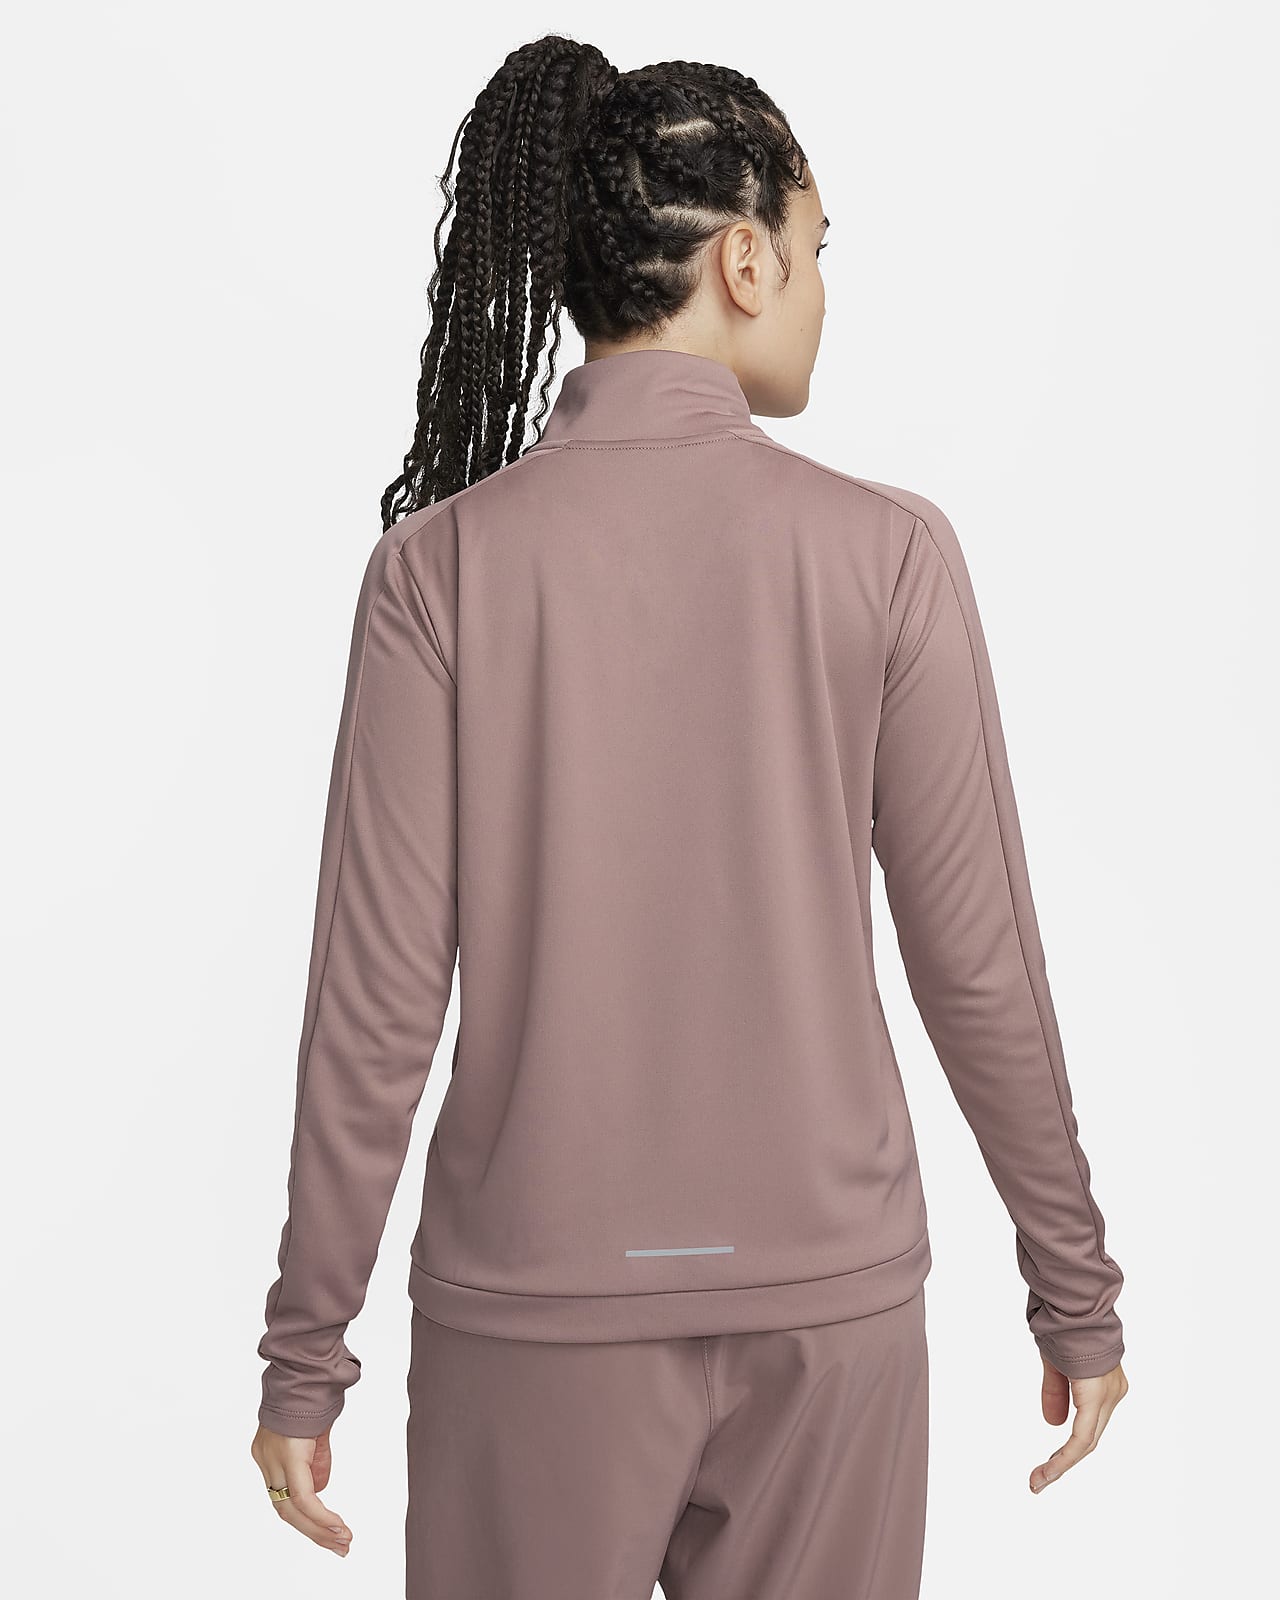 Nike Dri-FIT Pacer Women's 1/4-Zip Sweatshirt. Nike CA